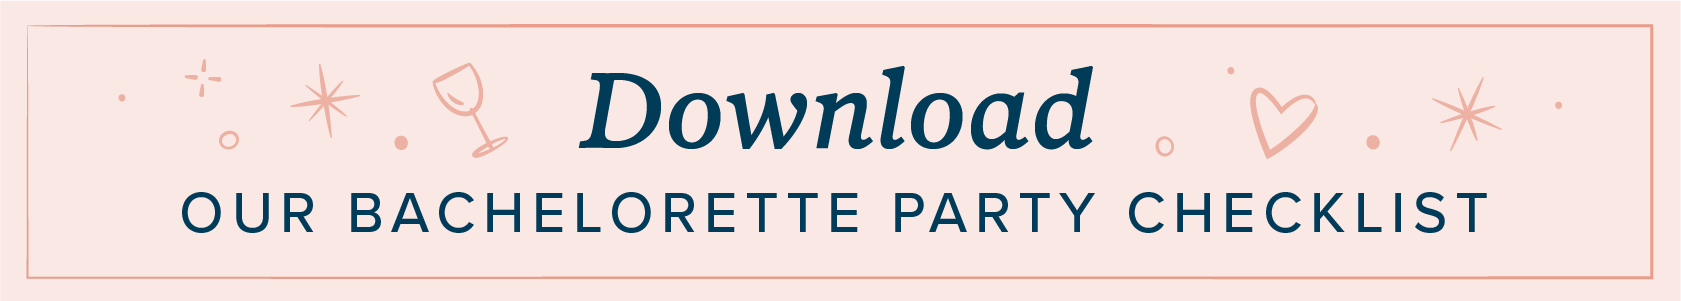 bachelorette-party-checklist-download-button